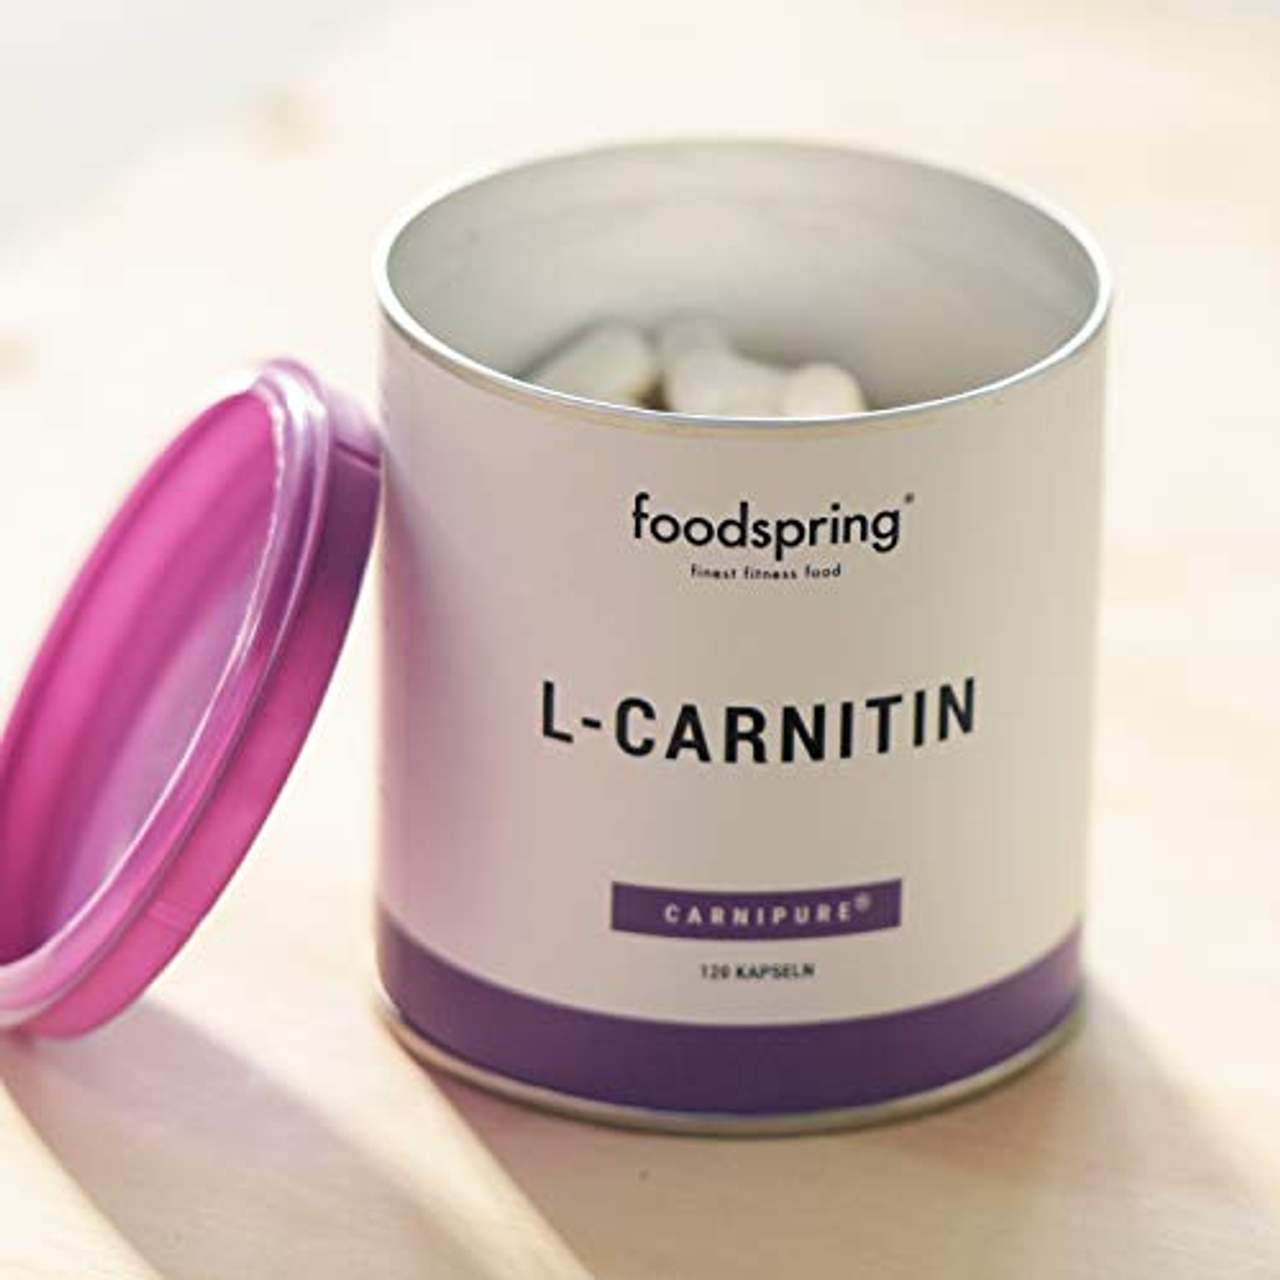 foodspring L-Carnitin Kapseln 120 Stück